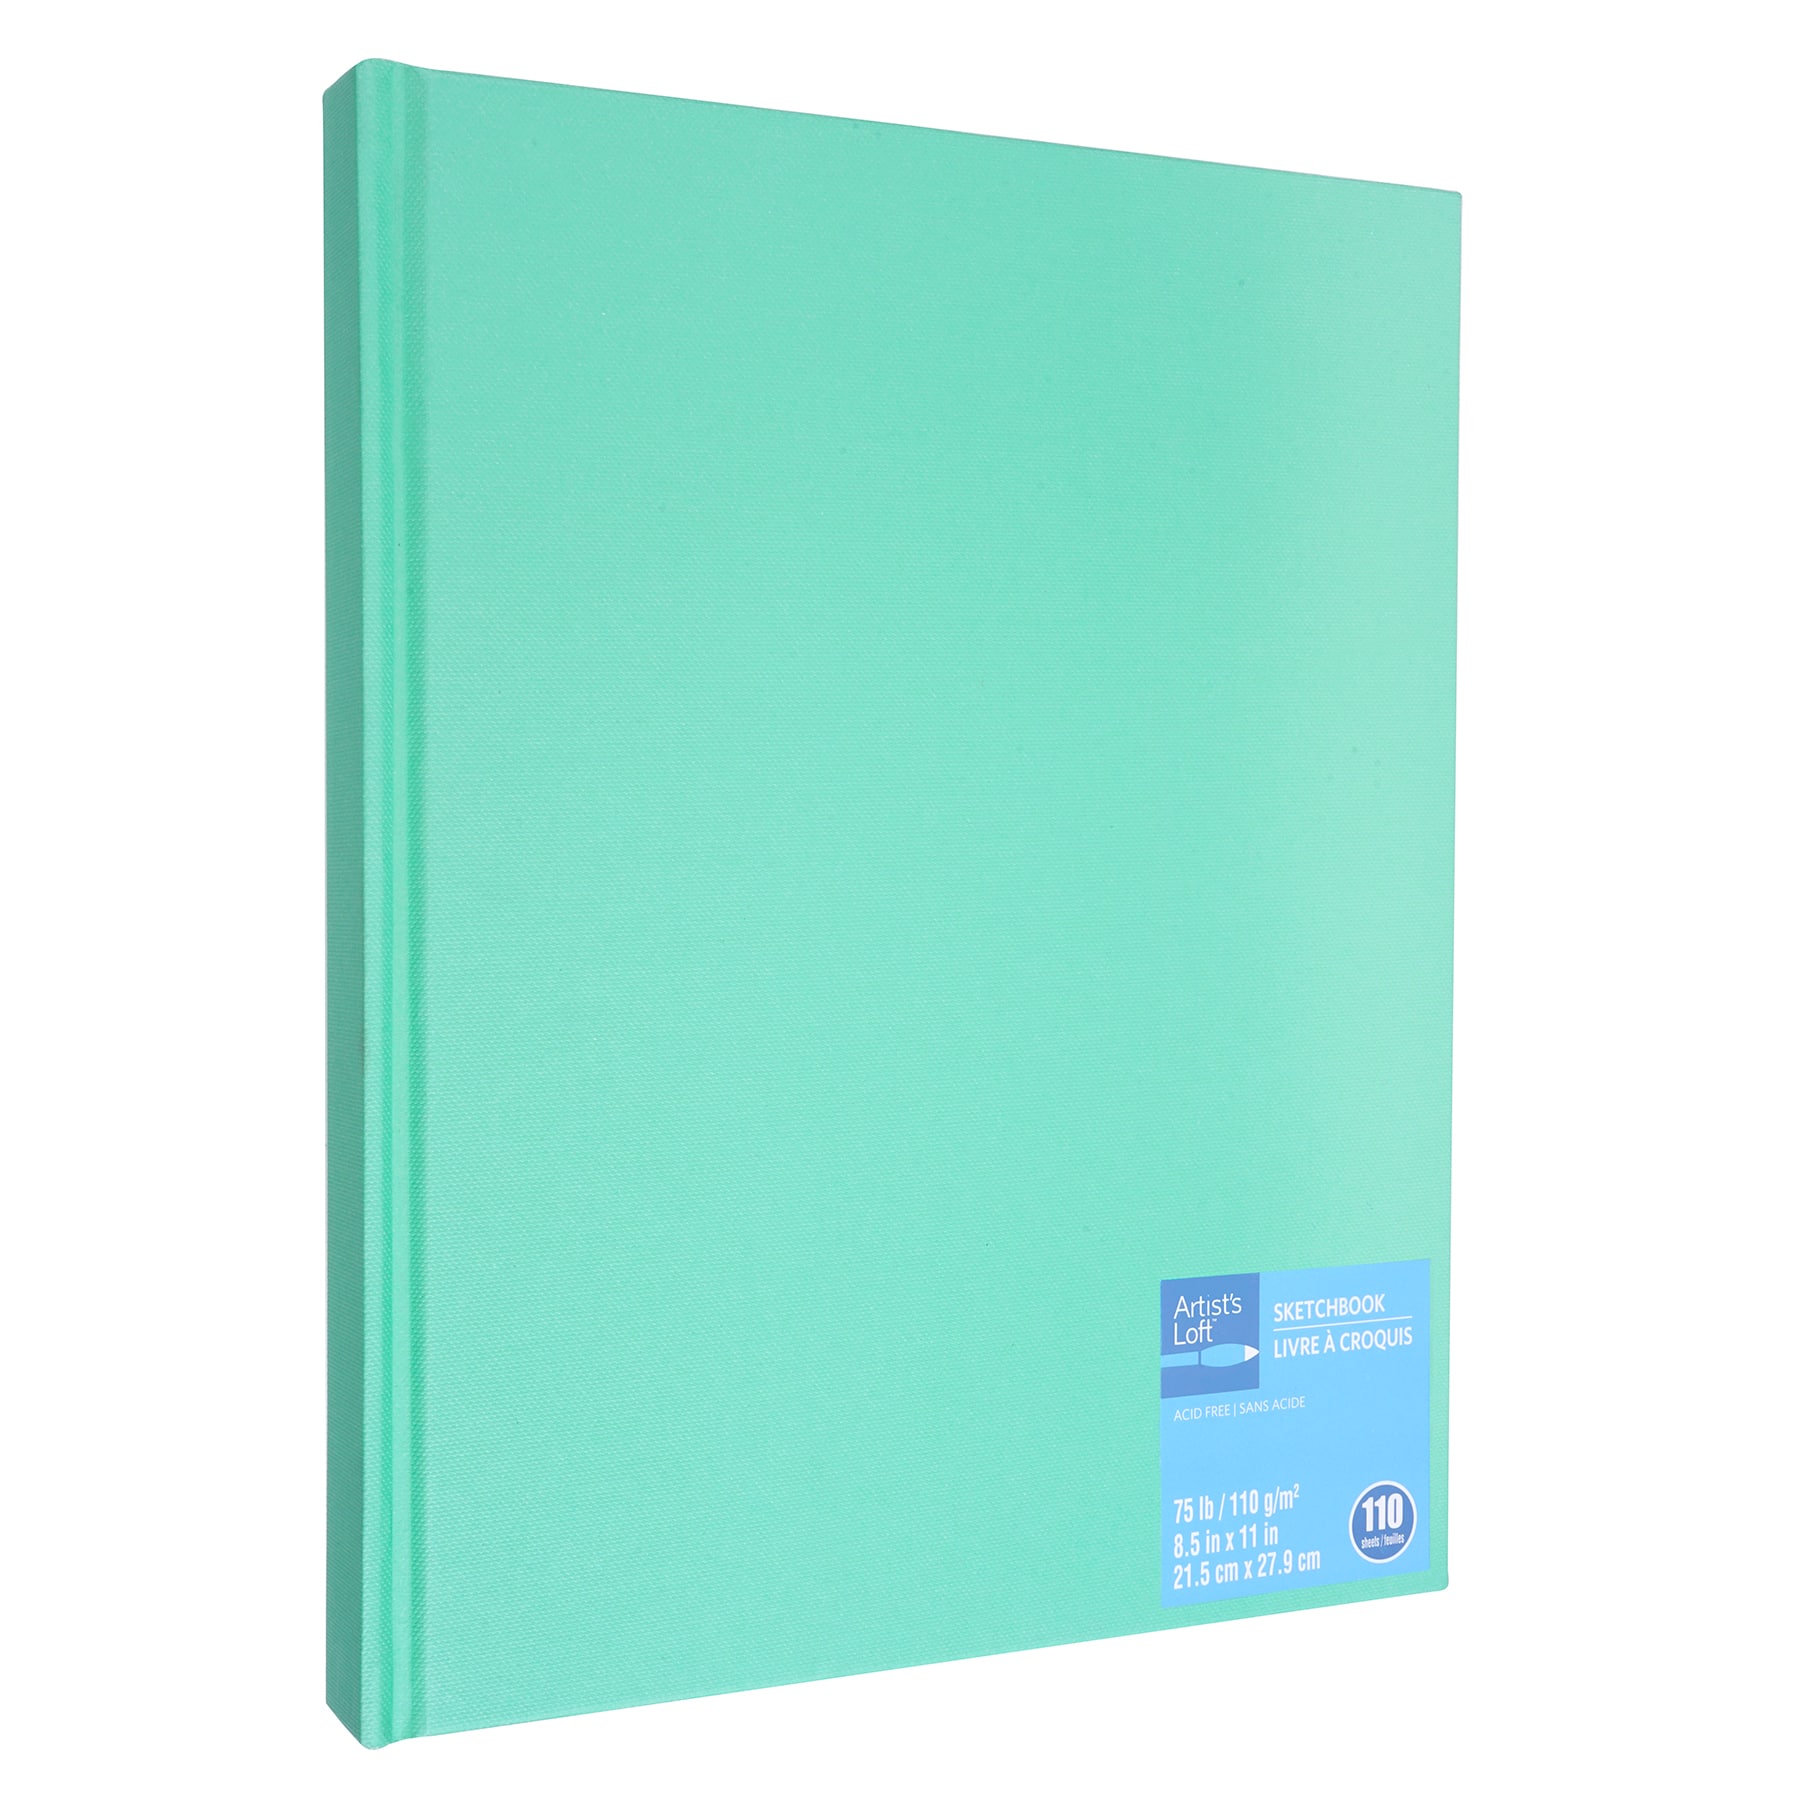 Best deal ⌛ 12 Pack: Light Pink Hardcover Sketchbook by Artist's Loft™,  5.5 x 8 by Artists Loft ⭐